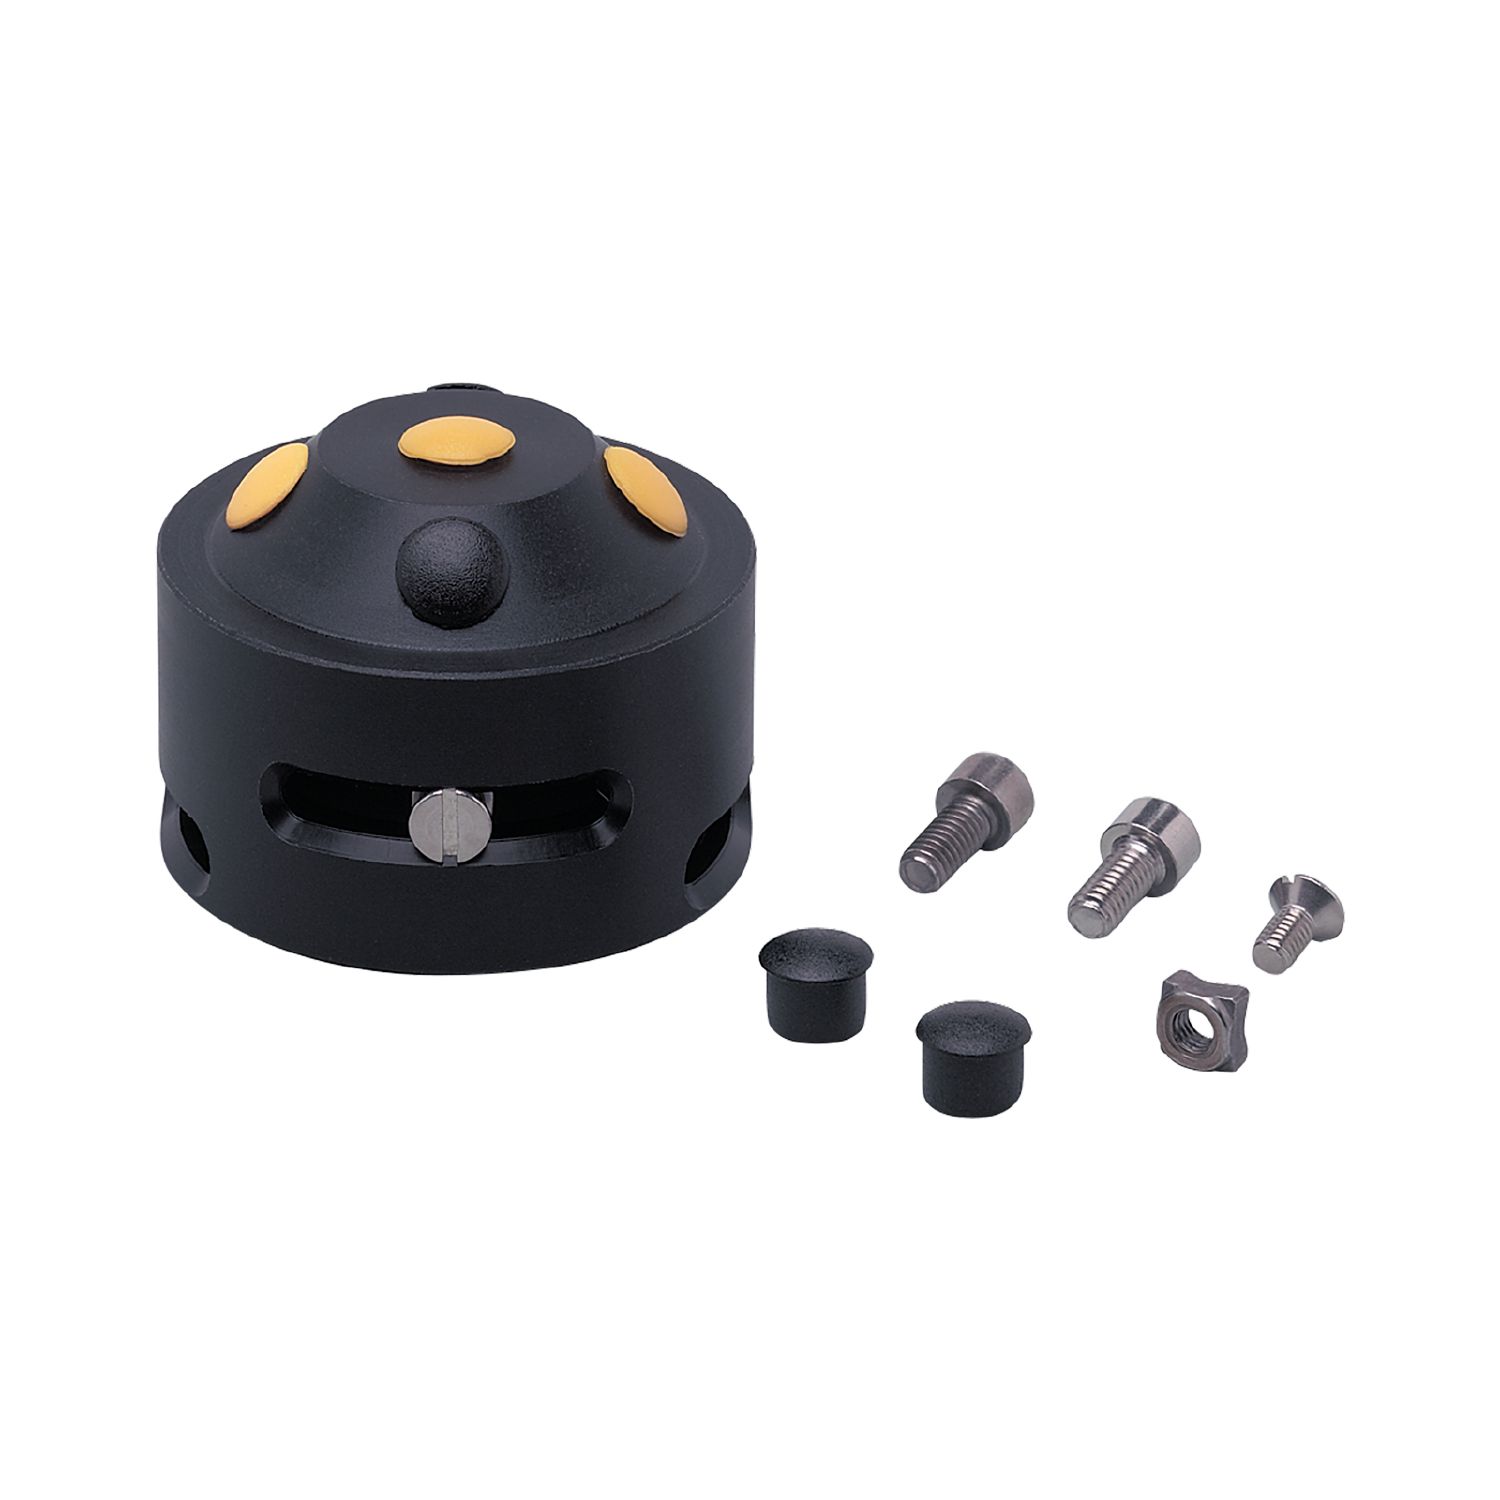 E17148 - Target puck for valve actuators - ifm